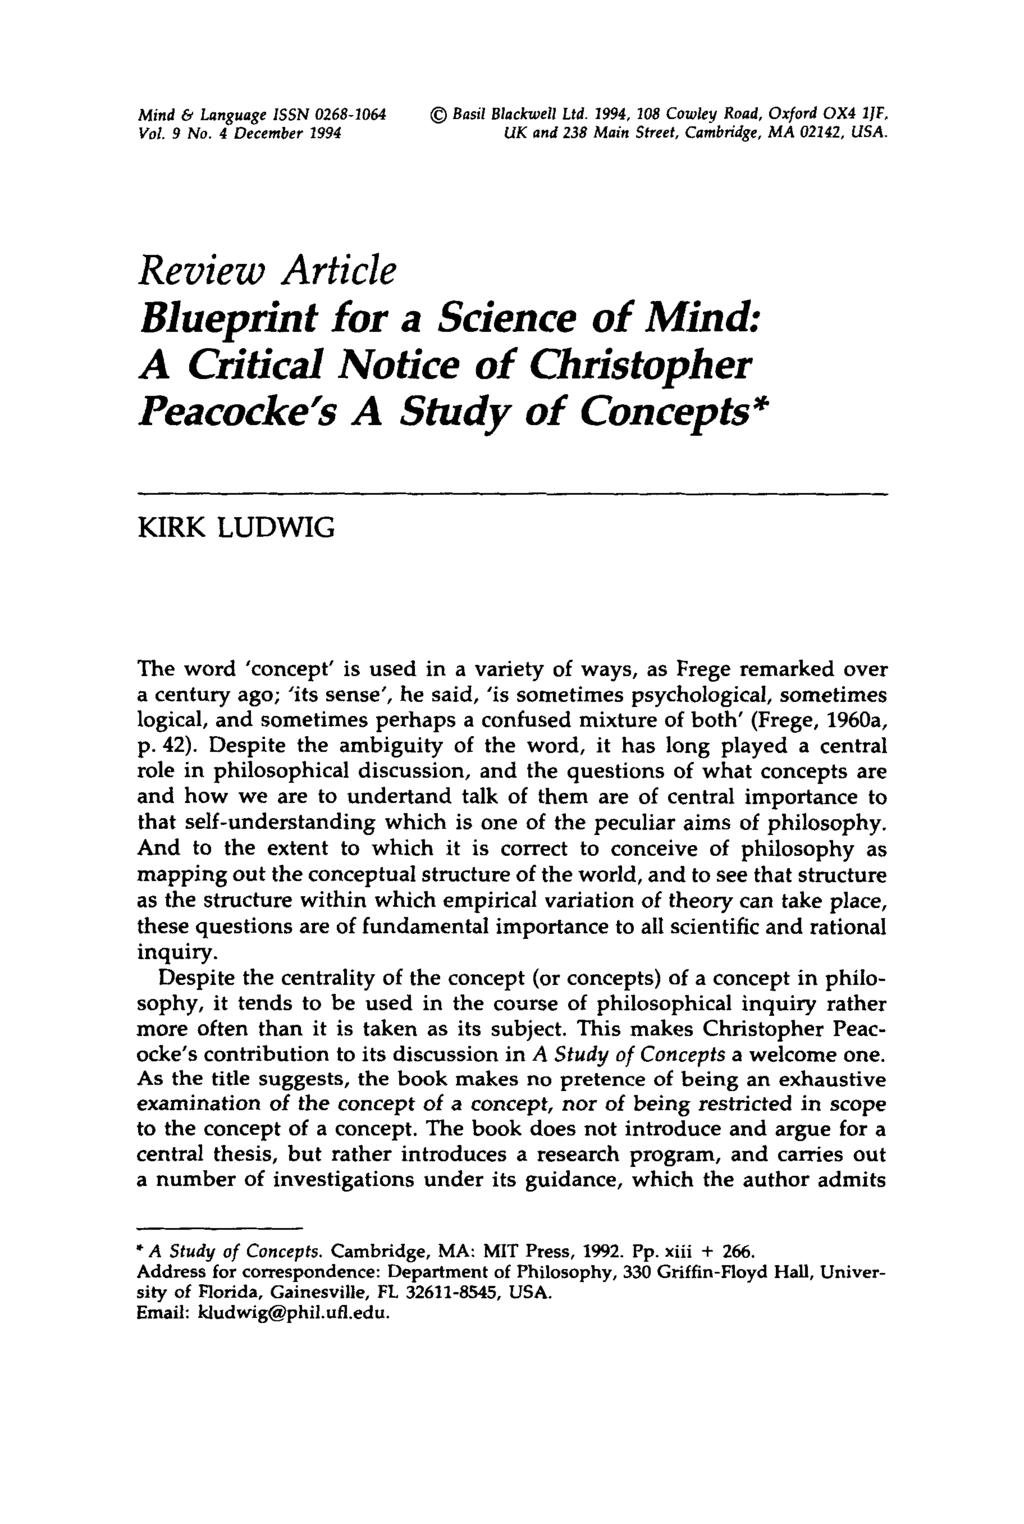 Mind & Language ISSN 0268-1064 Vol. 9 No. 4 December 1994 @ Basil Blackwell Ltd. 1994, 108 Cowley Road, Oxford OX4 IJF, UK and 238 Main Street, Cambridge, M A 02142, USA.